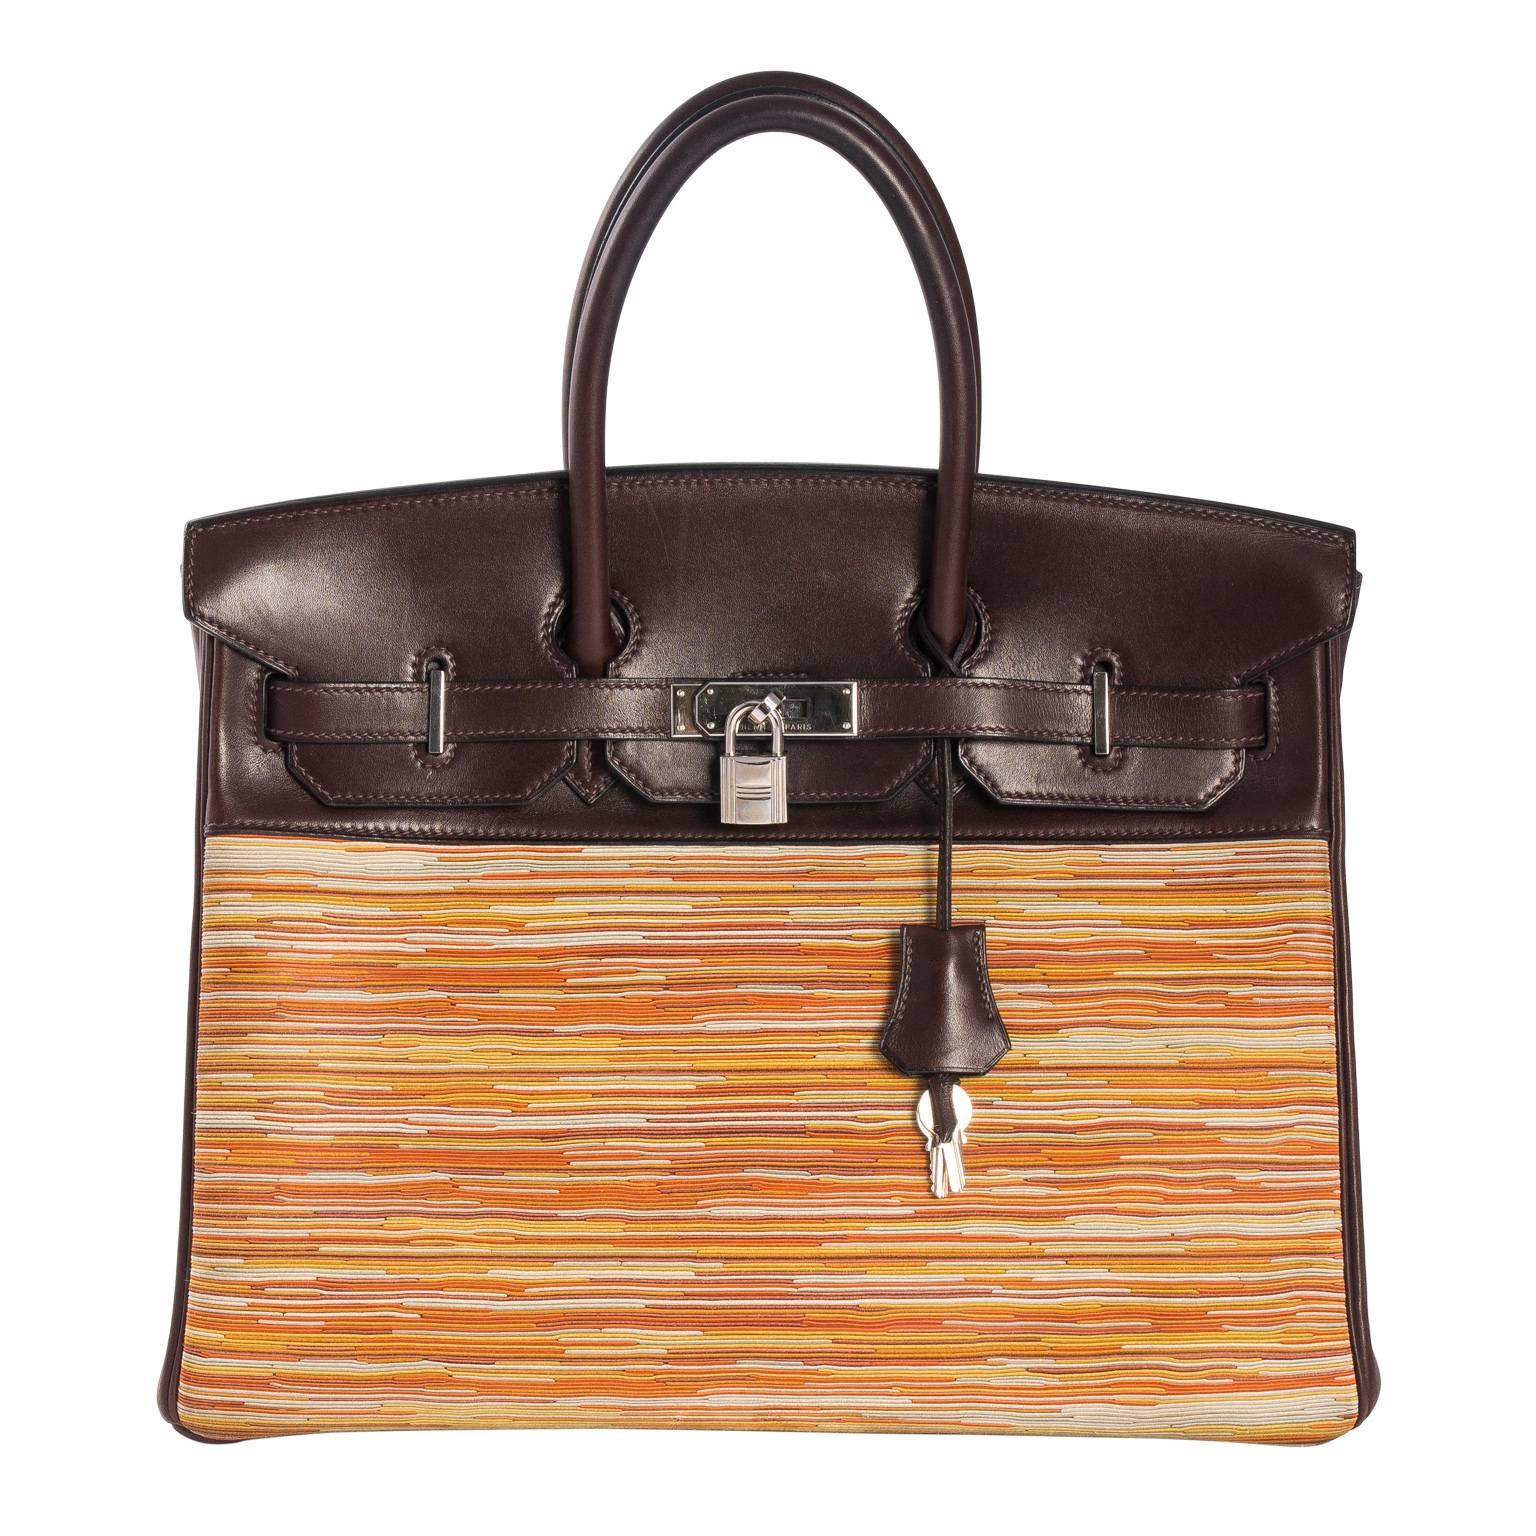 Hermès Vibrato handbag. For Sale